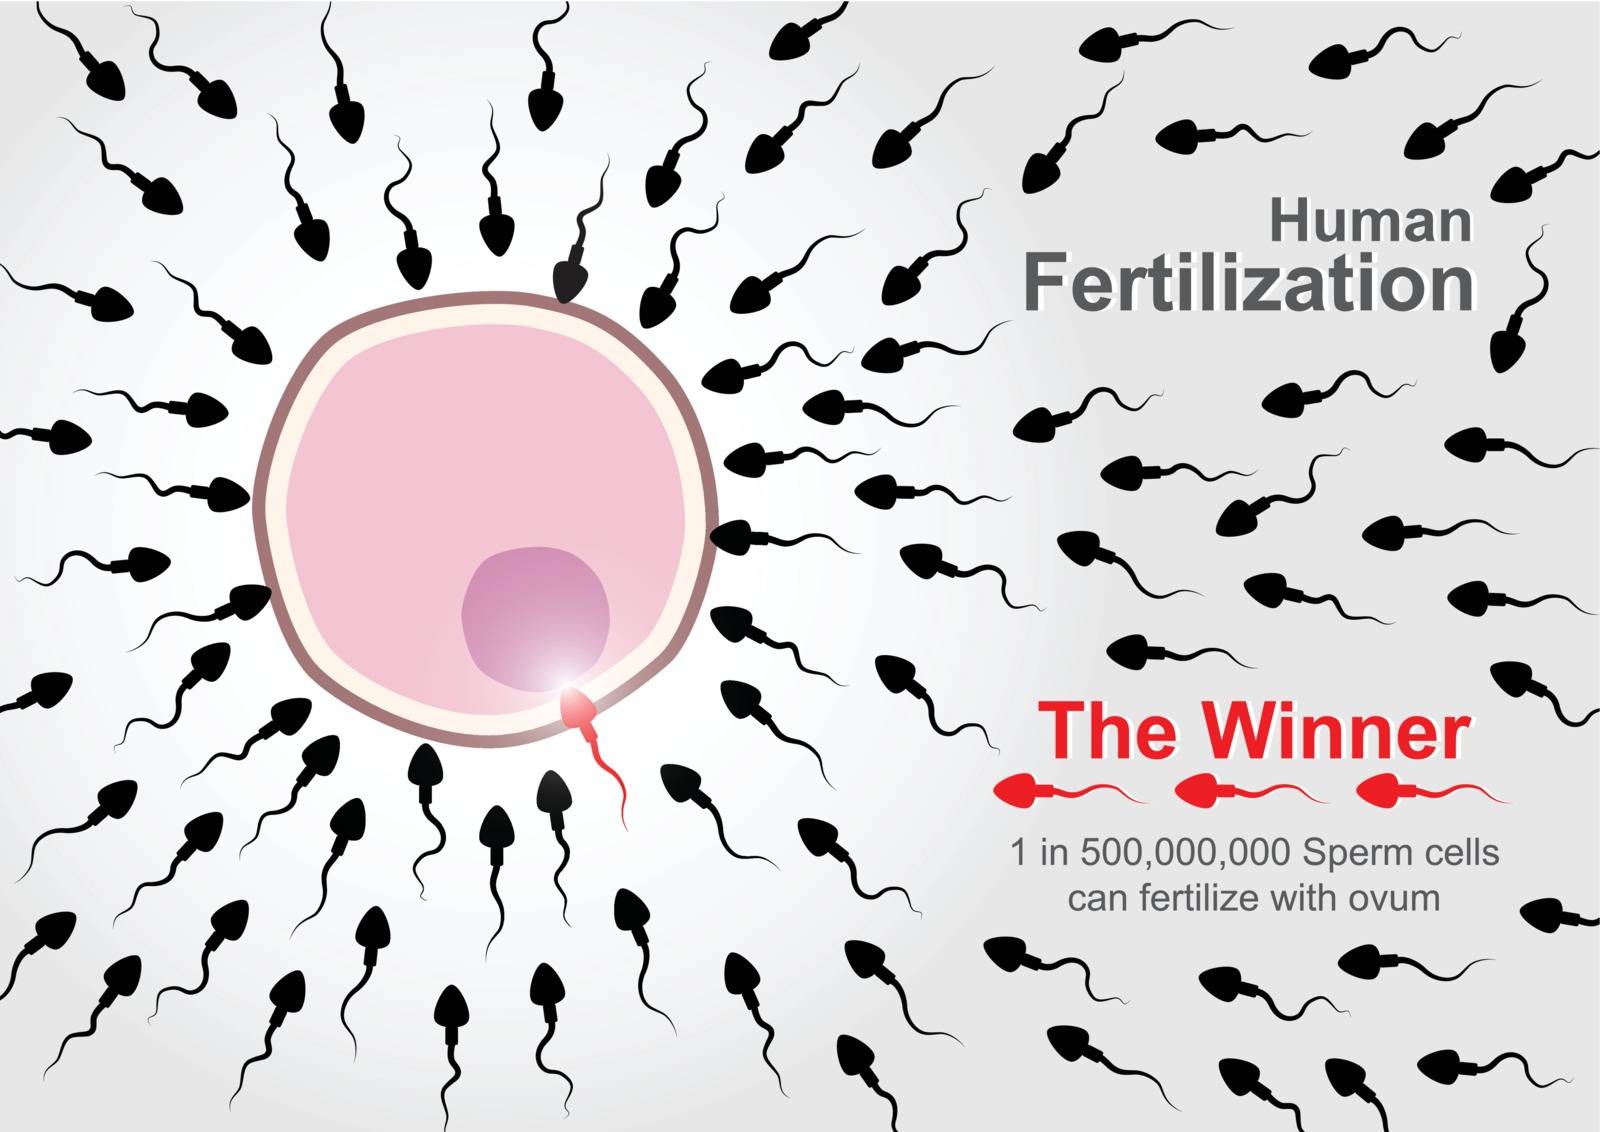 "Human Fertilization"    500,000,000 sperm cells race to fertilize with ovum 
but 1 in 500,000,000 sperm cells can complete fertilize.